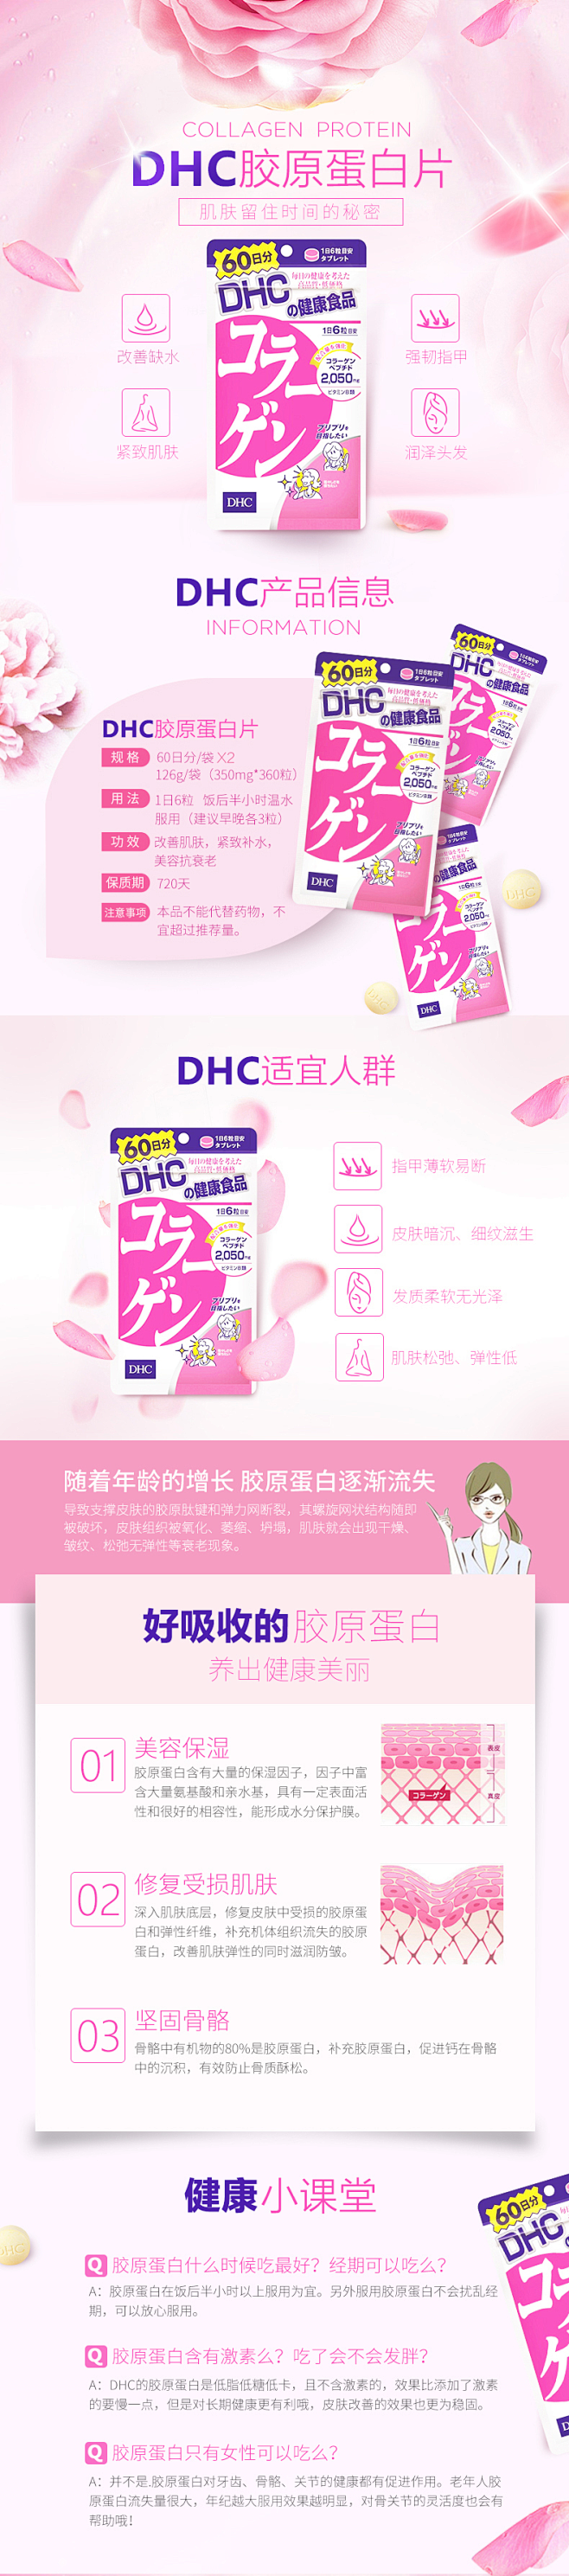 DHC美肌鱼胶原蛋白片360粒-天猫国际